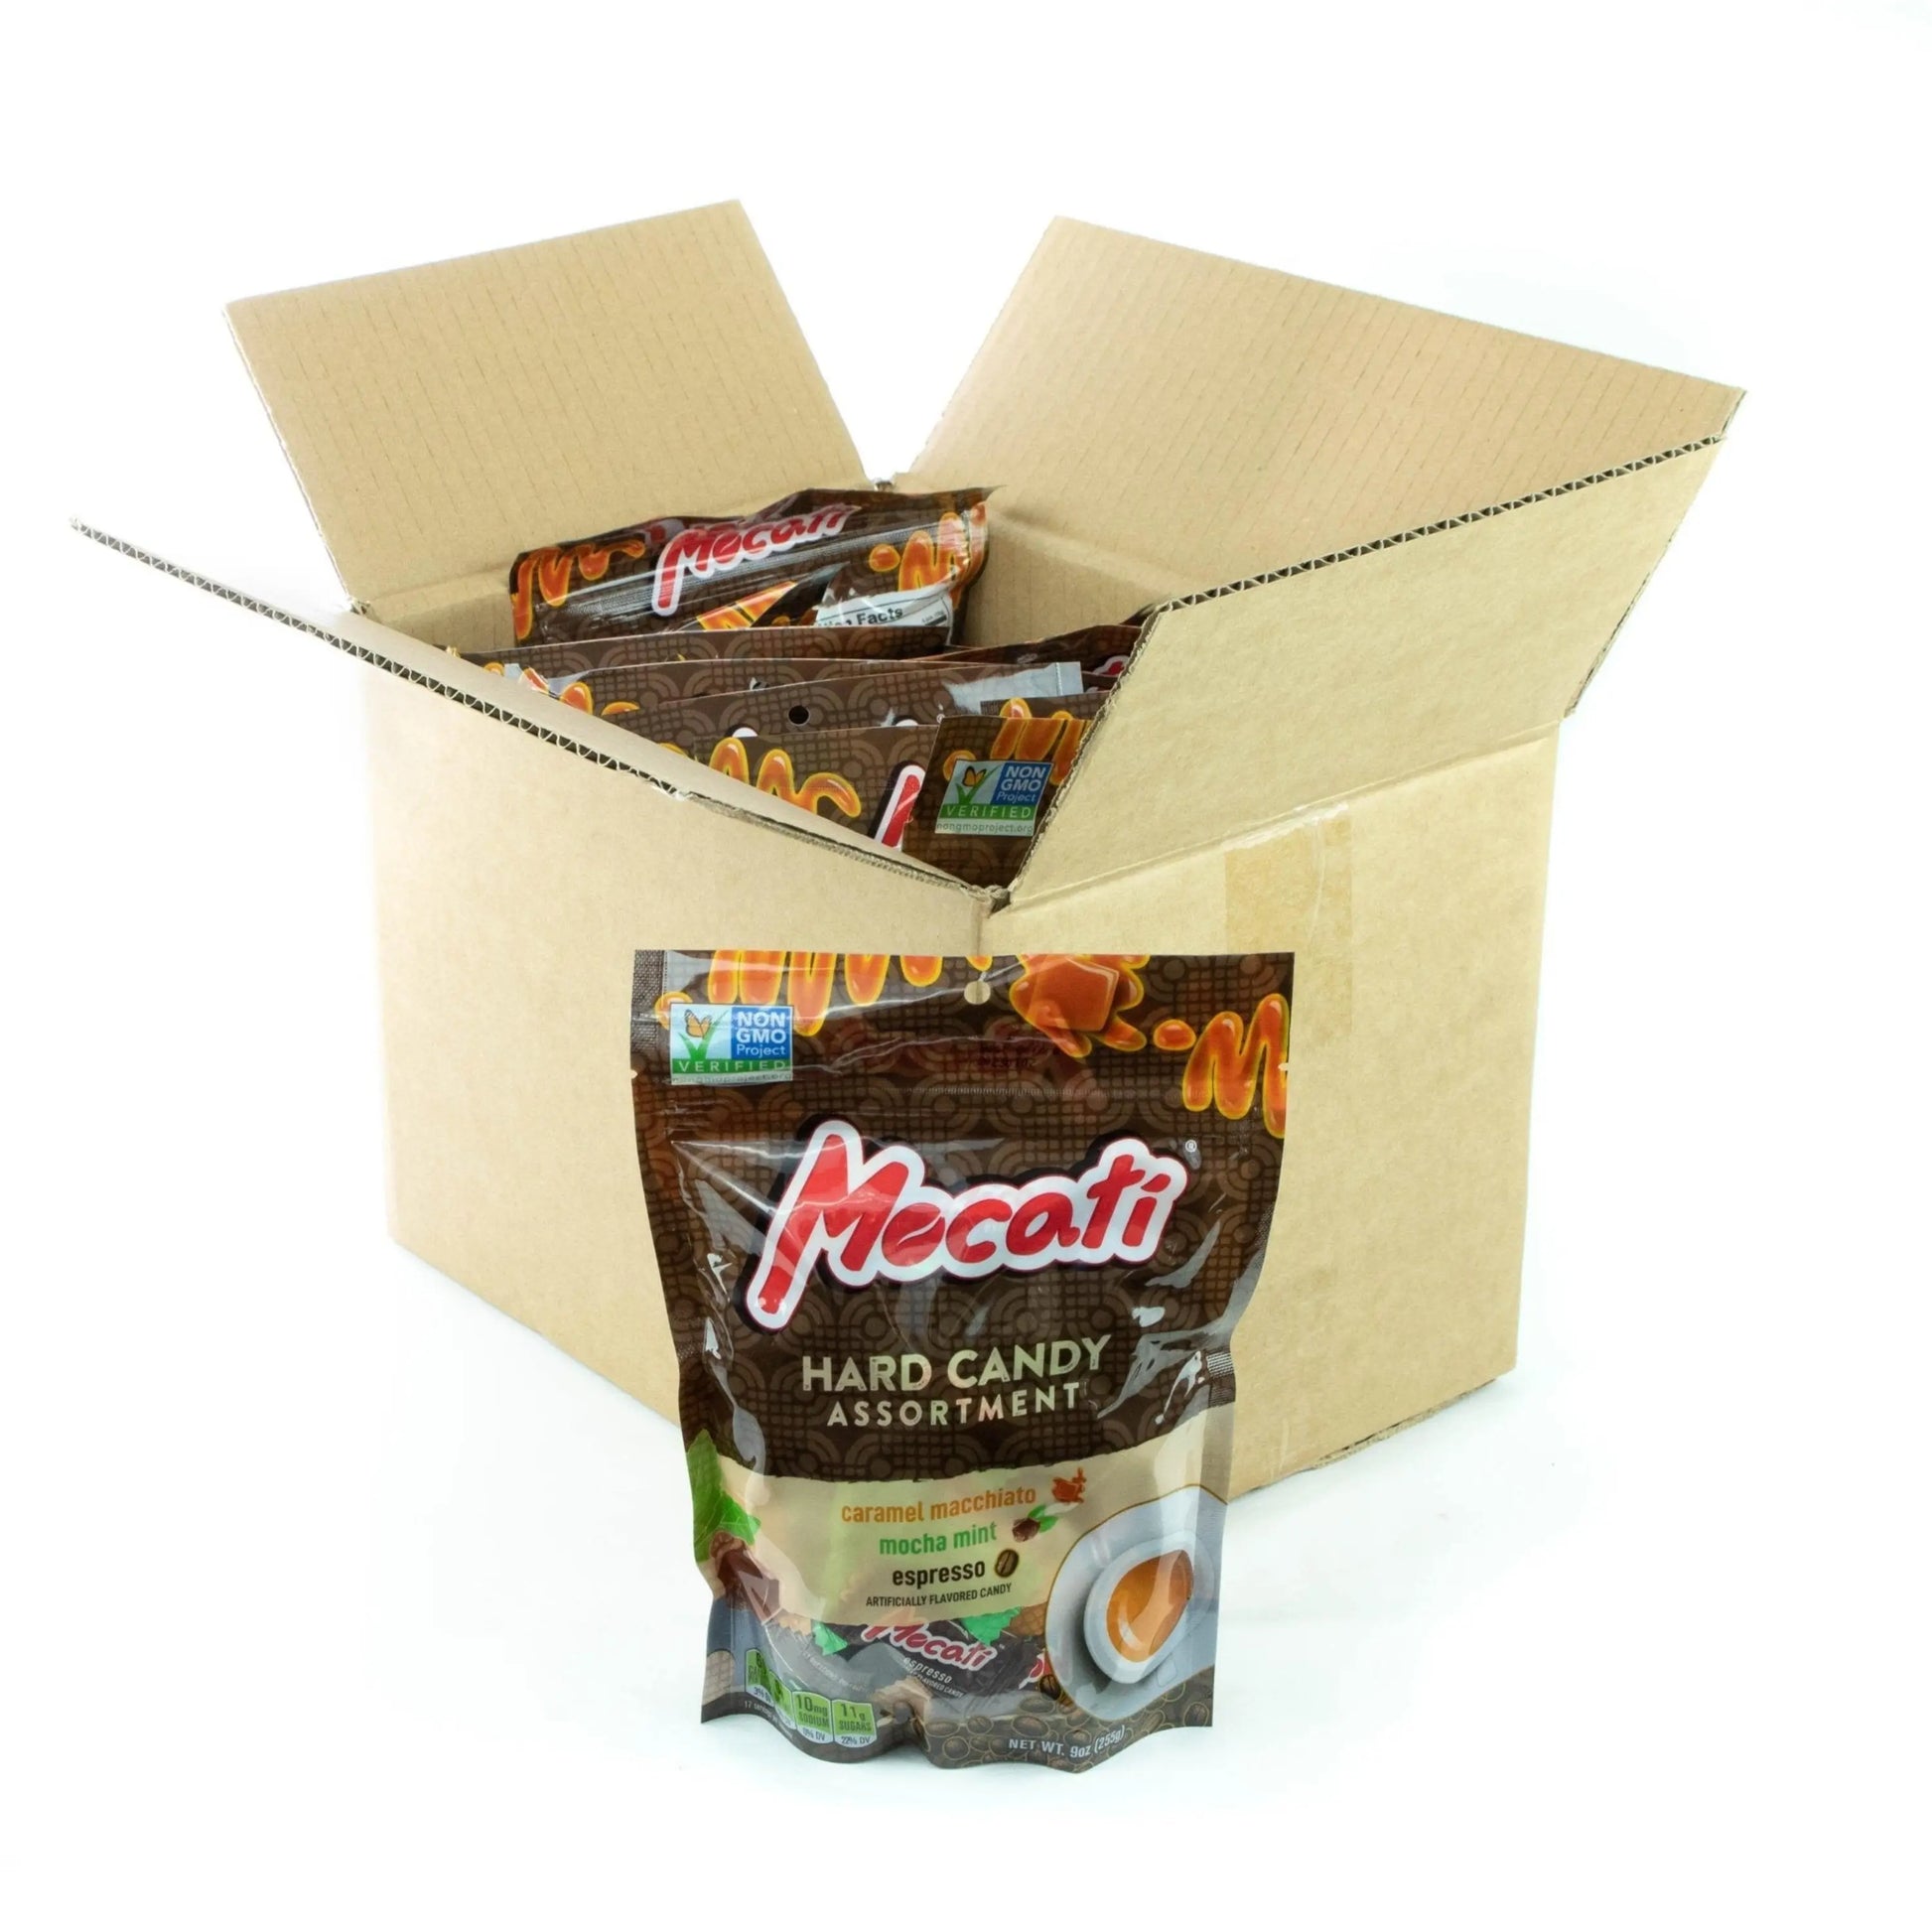 12 count box of Aprati Mocati Coffee Flavored Hard Candy 9oz bags